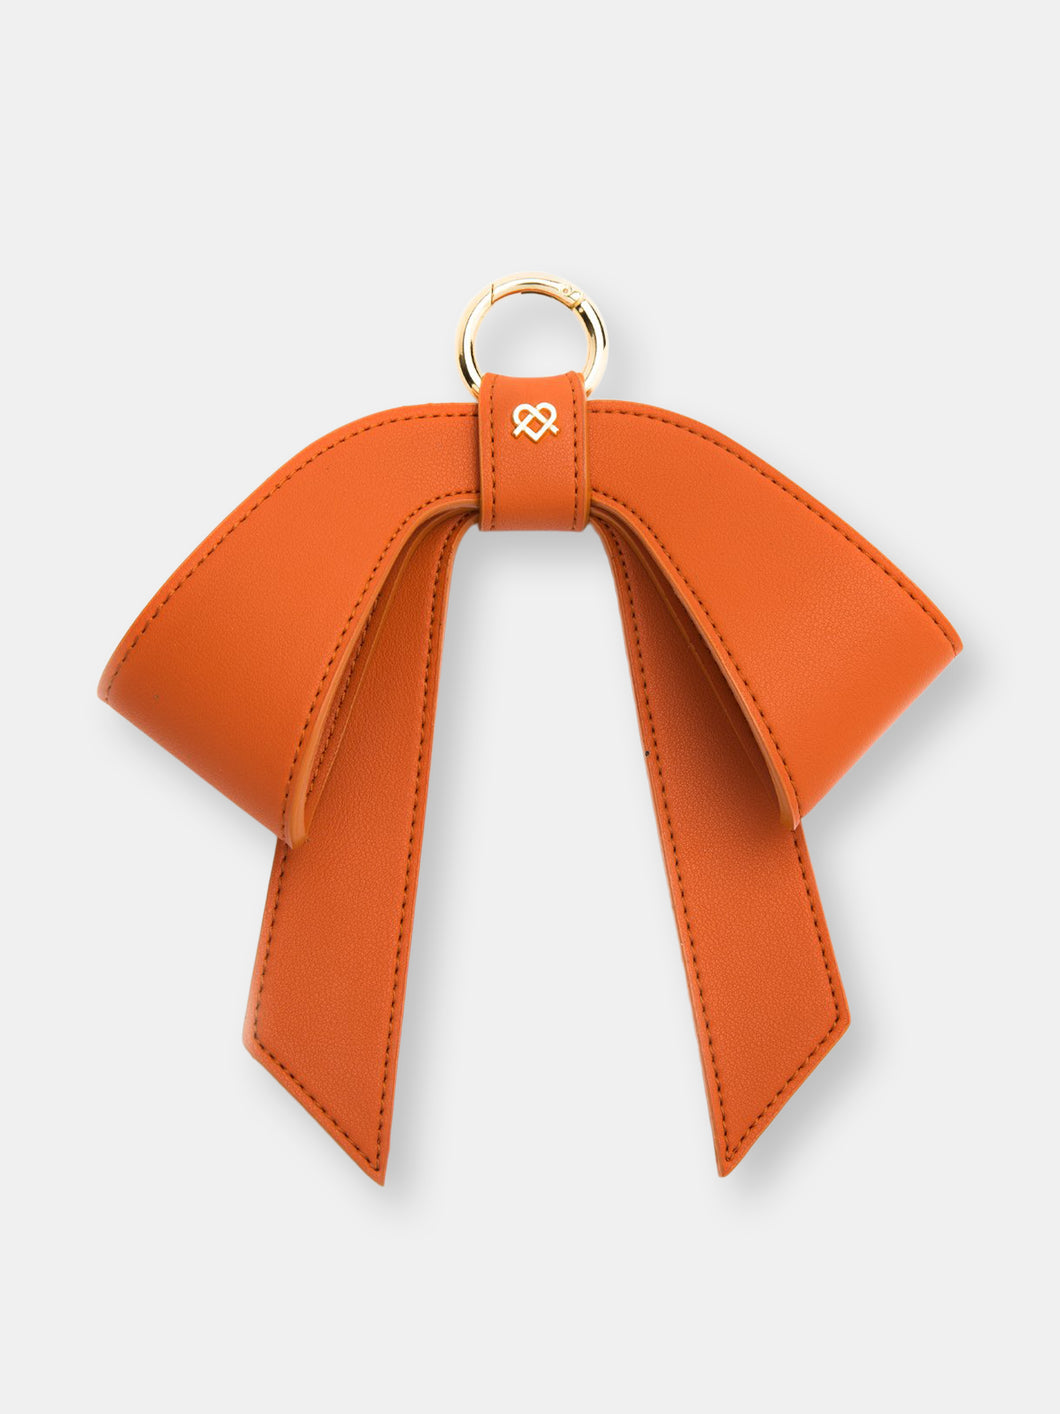 Cottontail Bow - Orange Vegan Leather Bag Charm